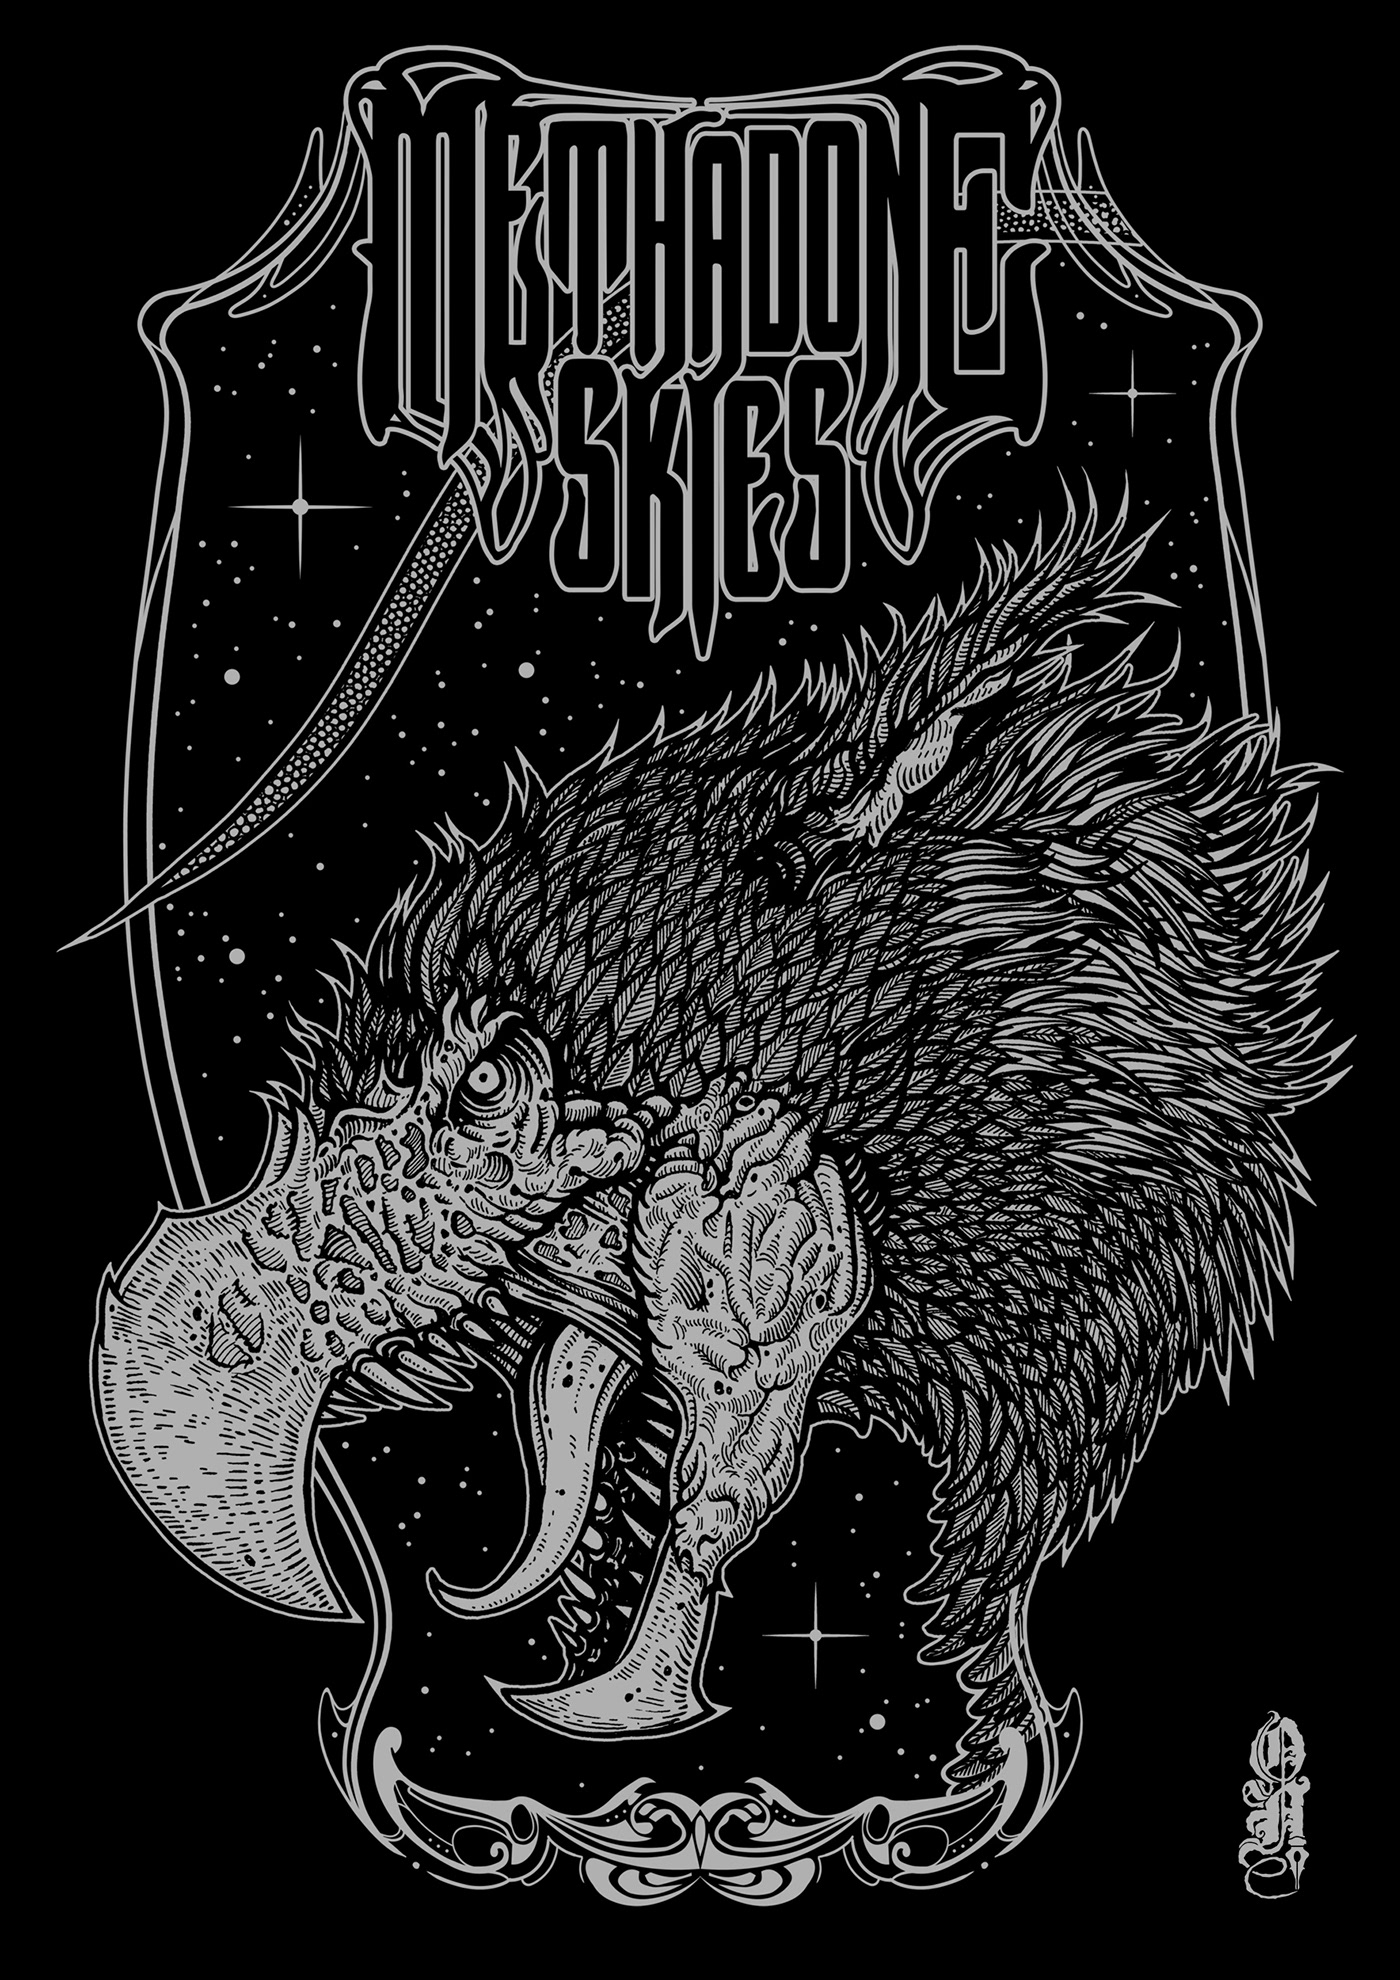 mihai manescu obsidian nibs tshirt Psychedelic Rock band tshirt pen and ink Griffin ink tshirt artwork stoner rock